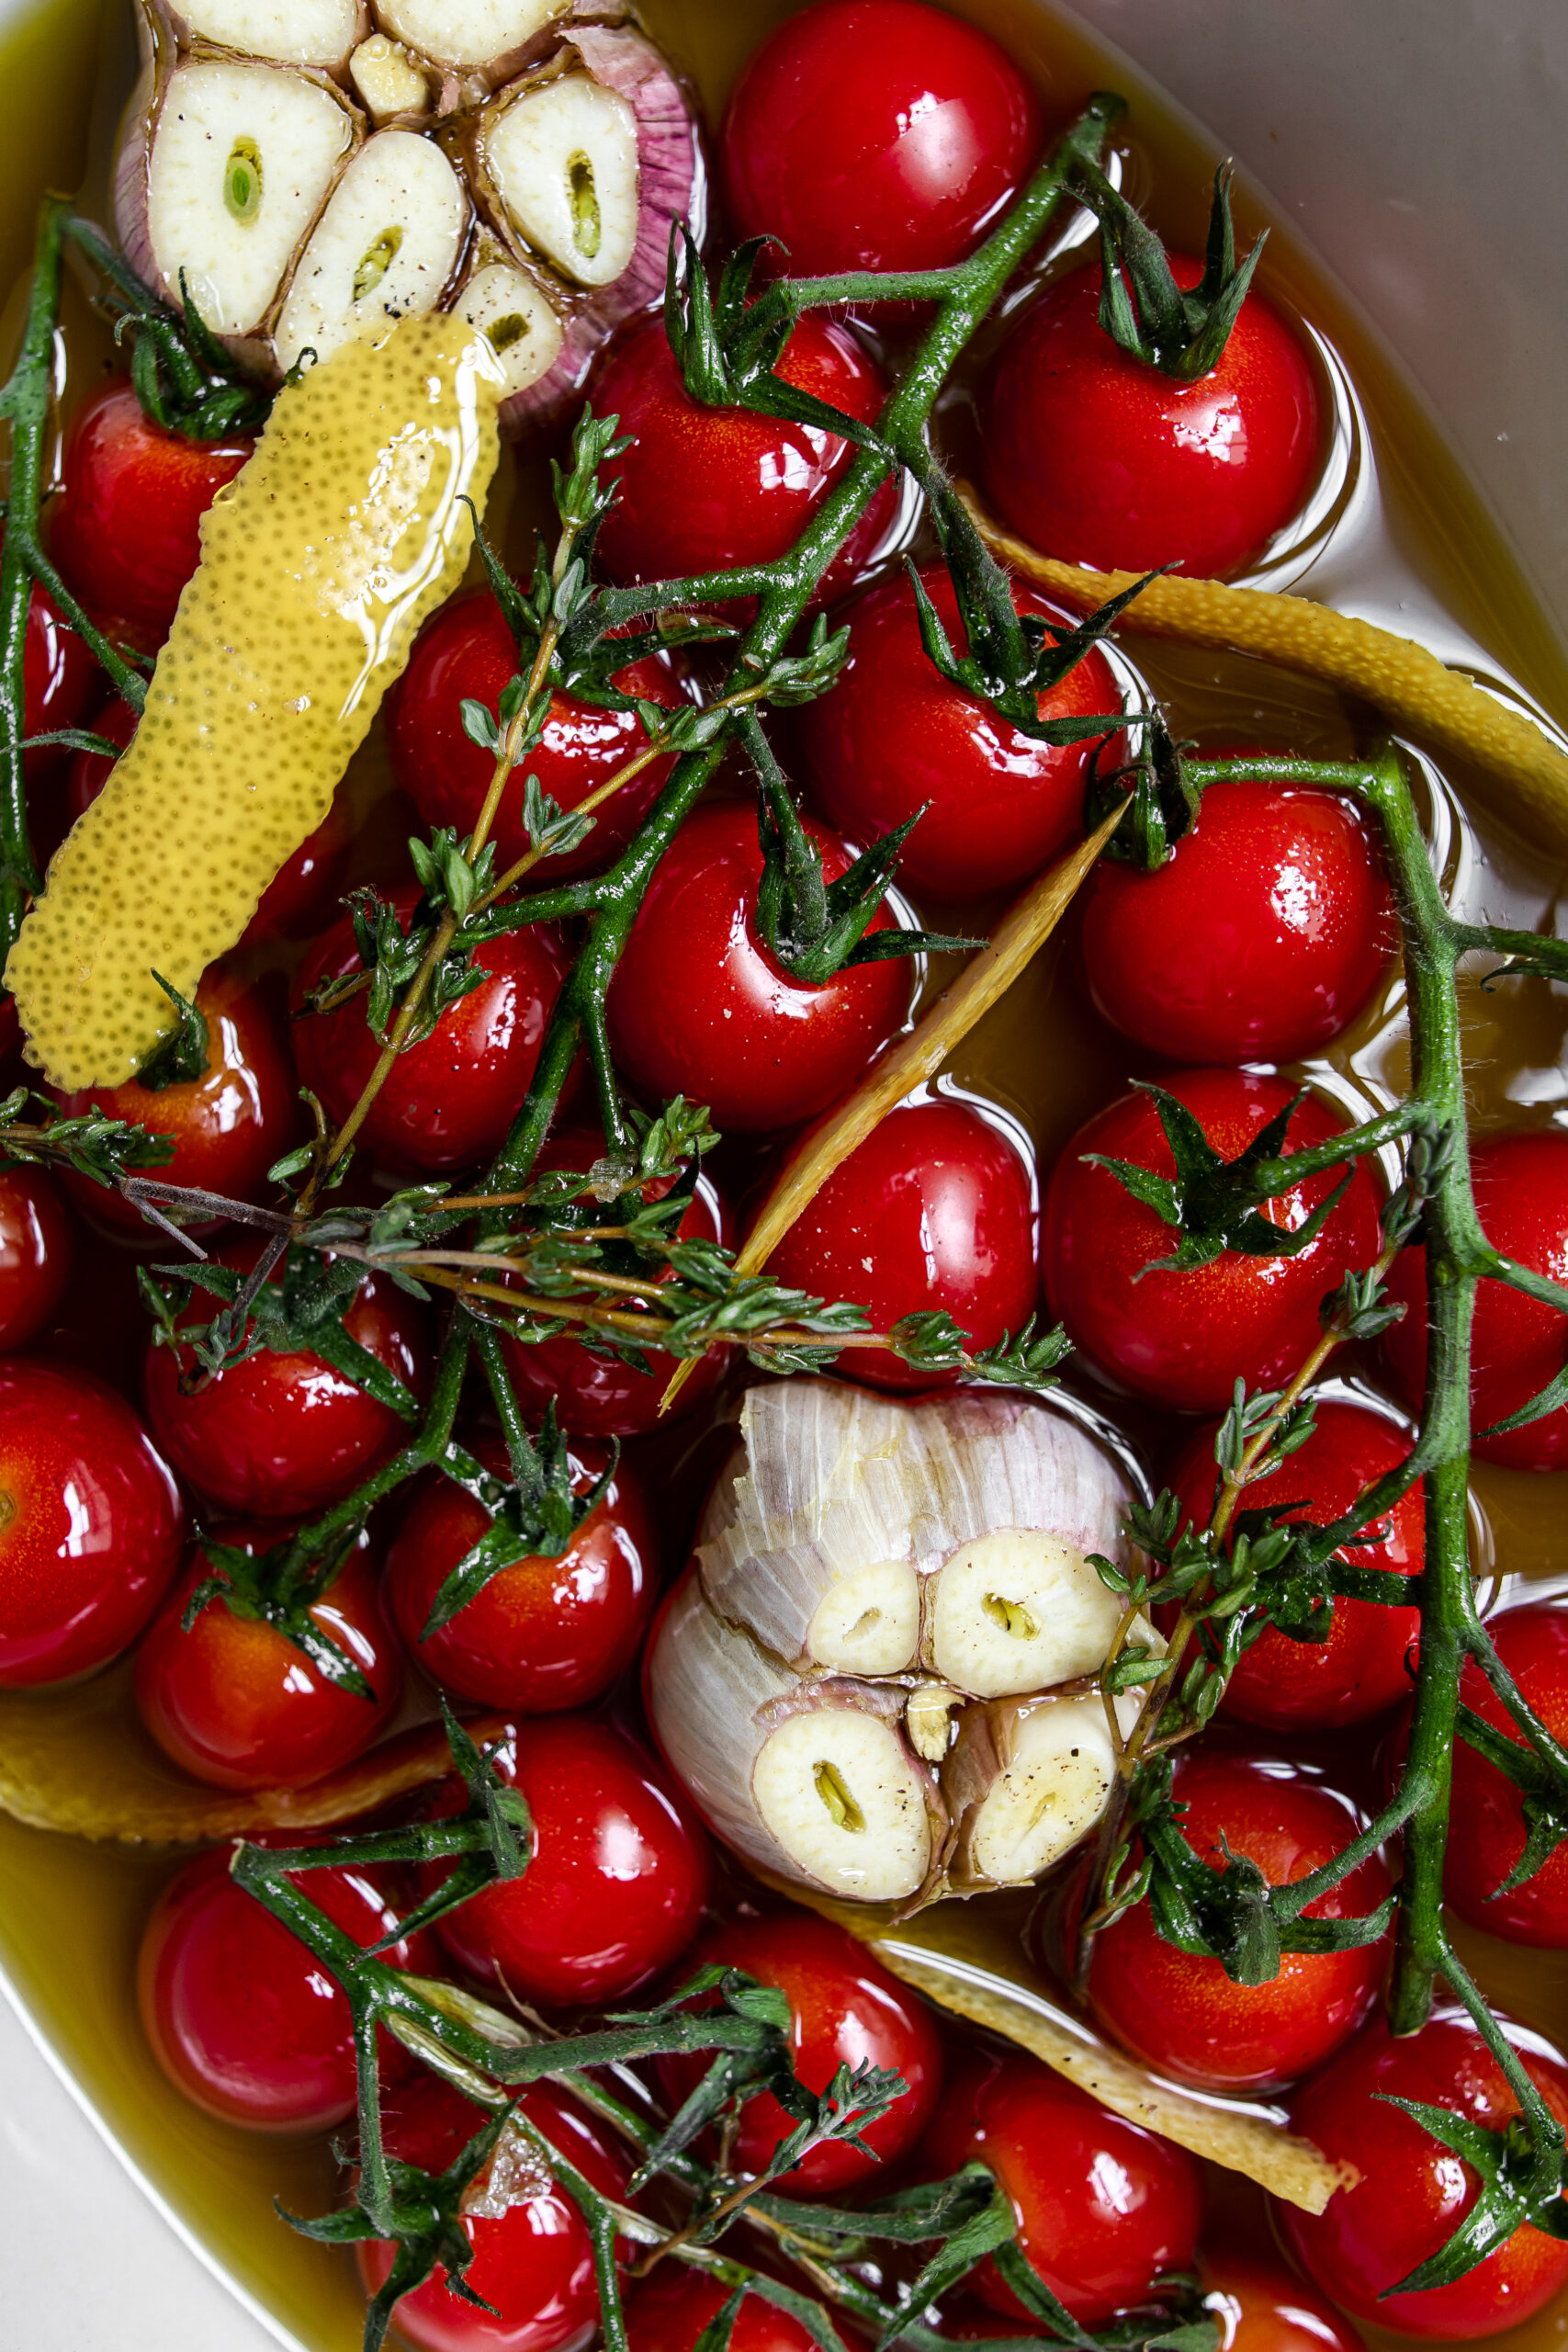 Fresh tomatoes, lemon peel, and garlic in olive oil.